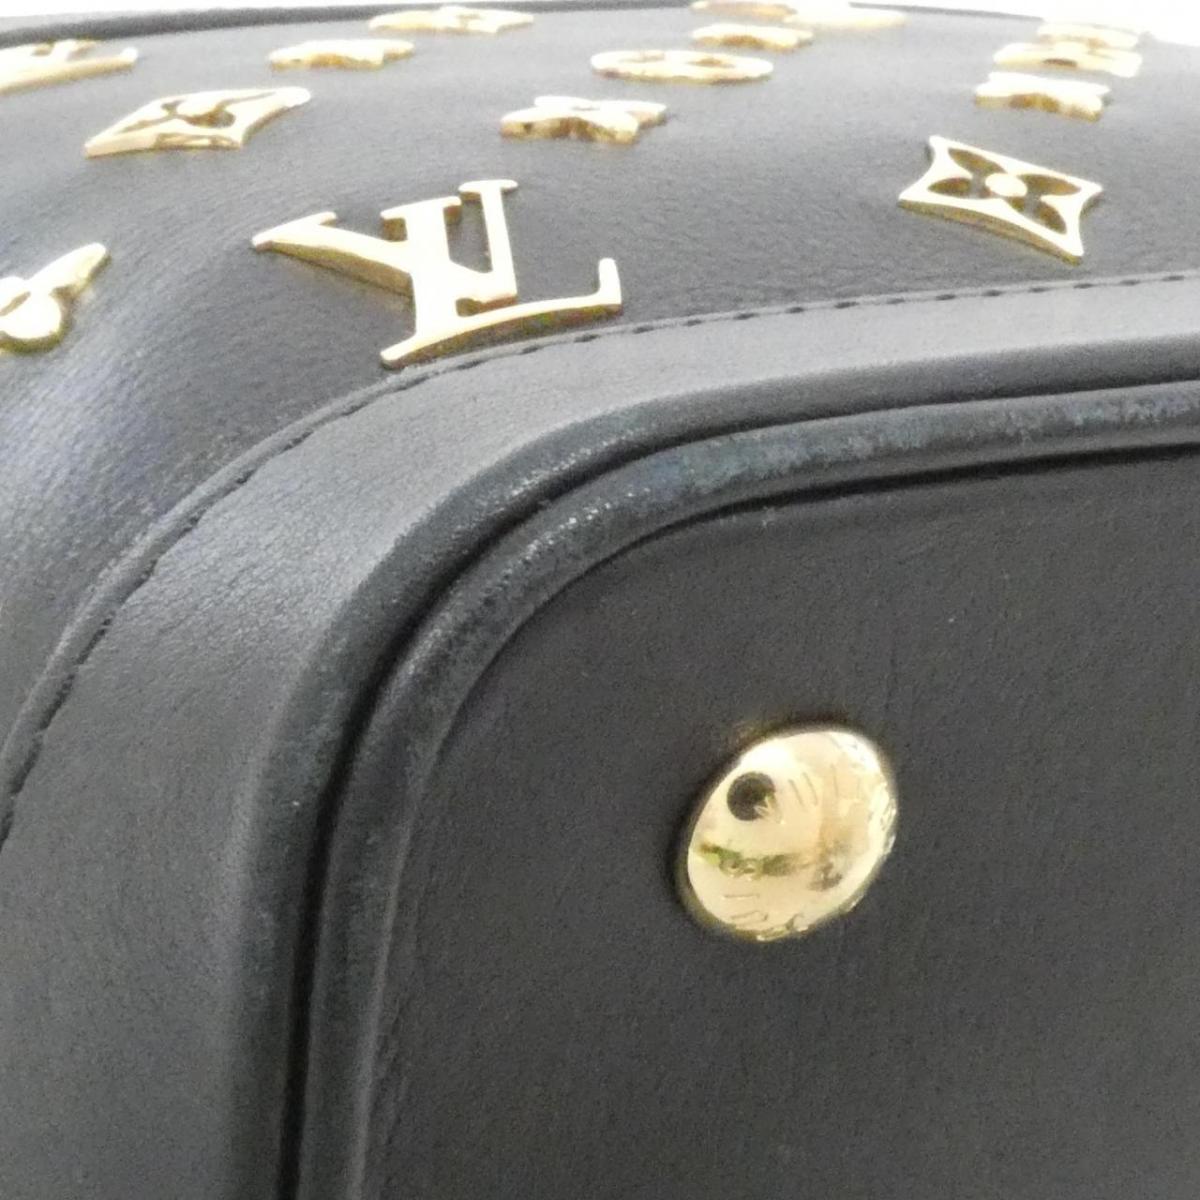 Louis Vuitton Cruiser M57788 Shoulder Bag